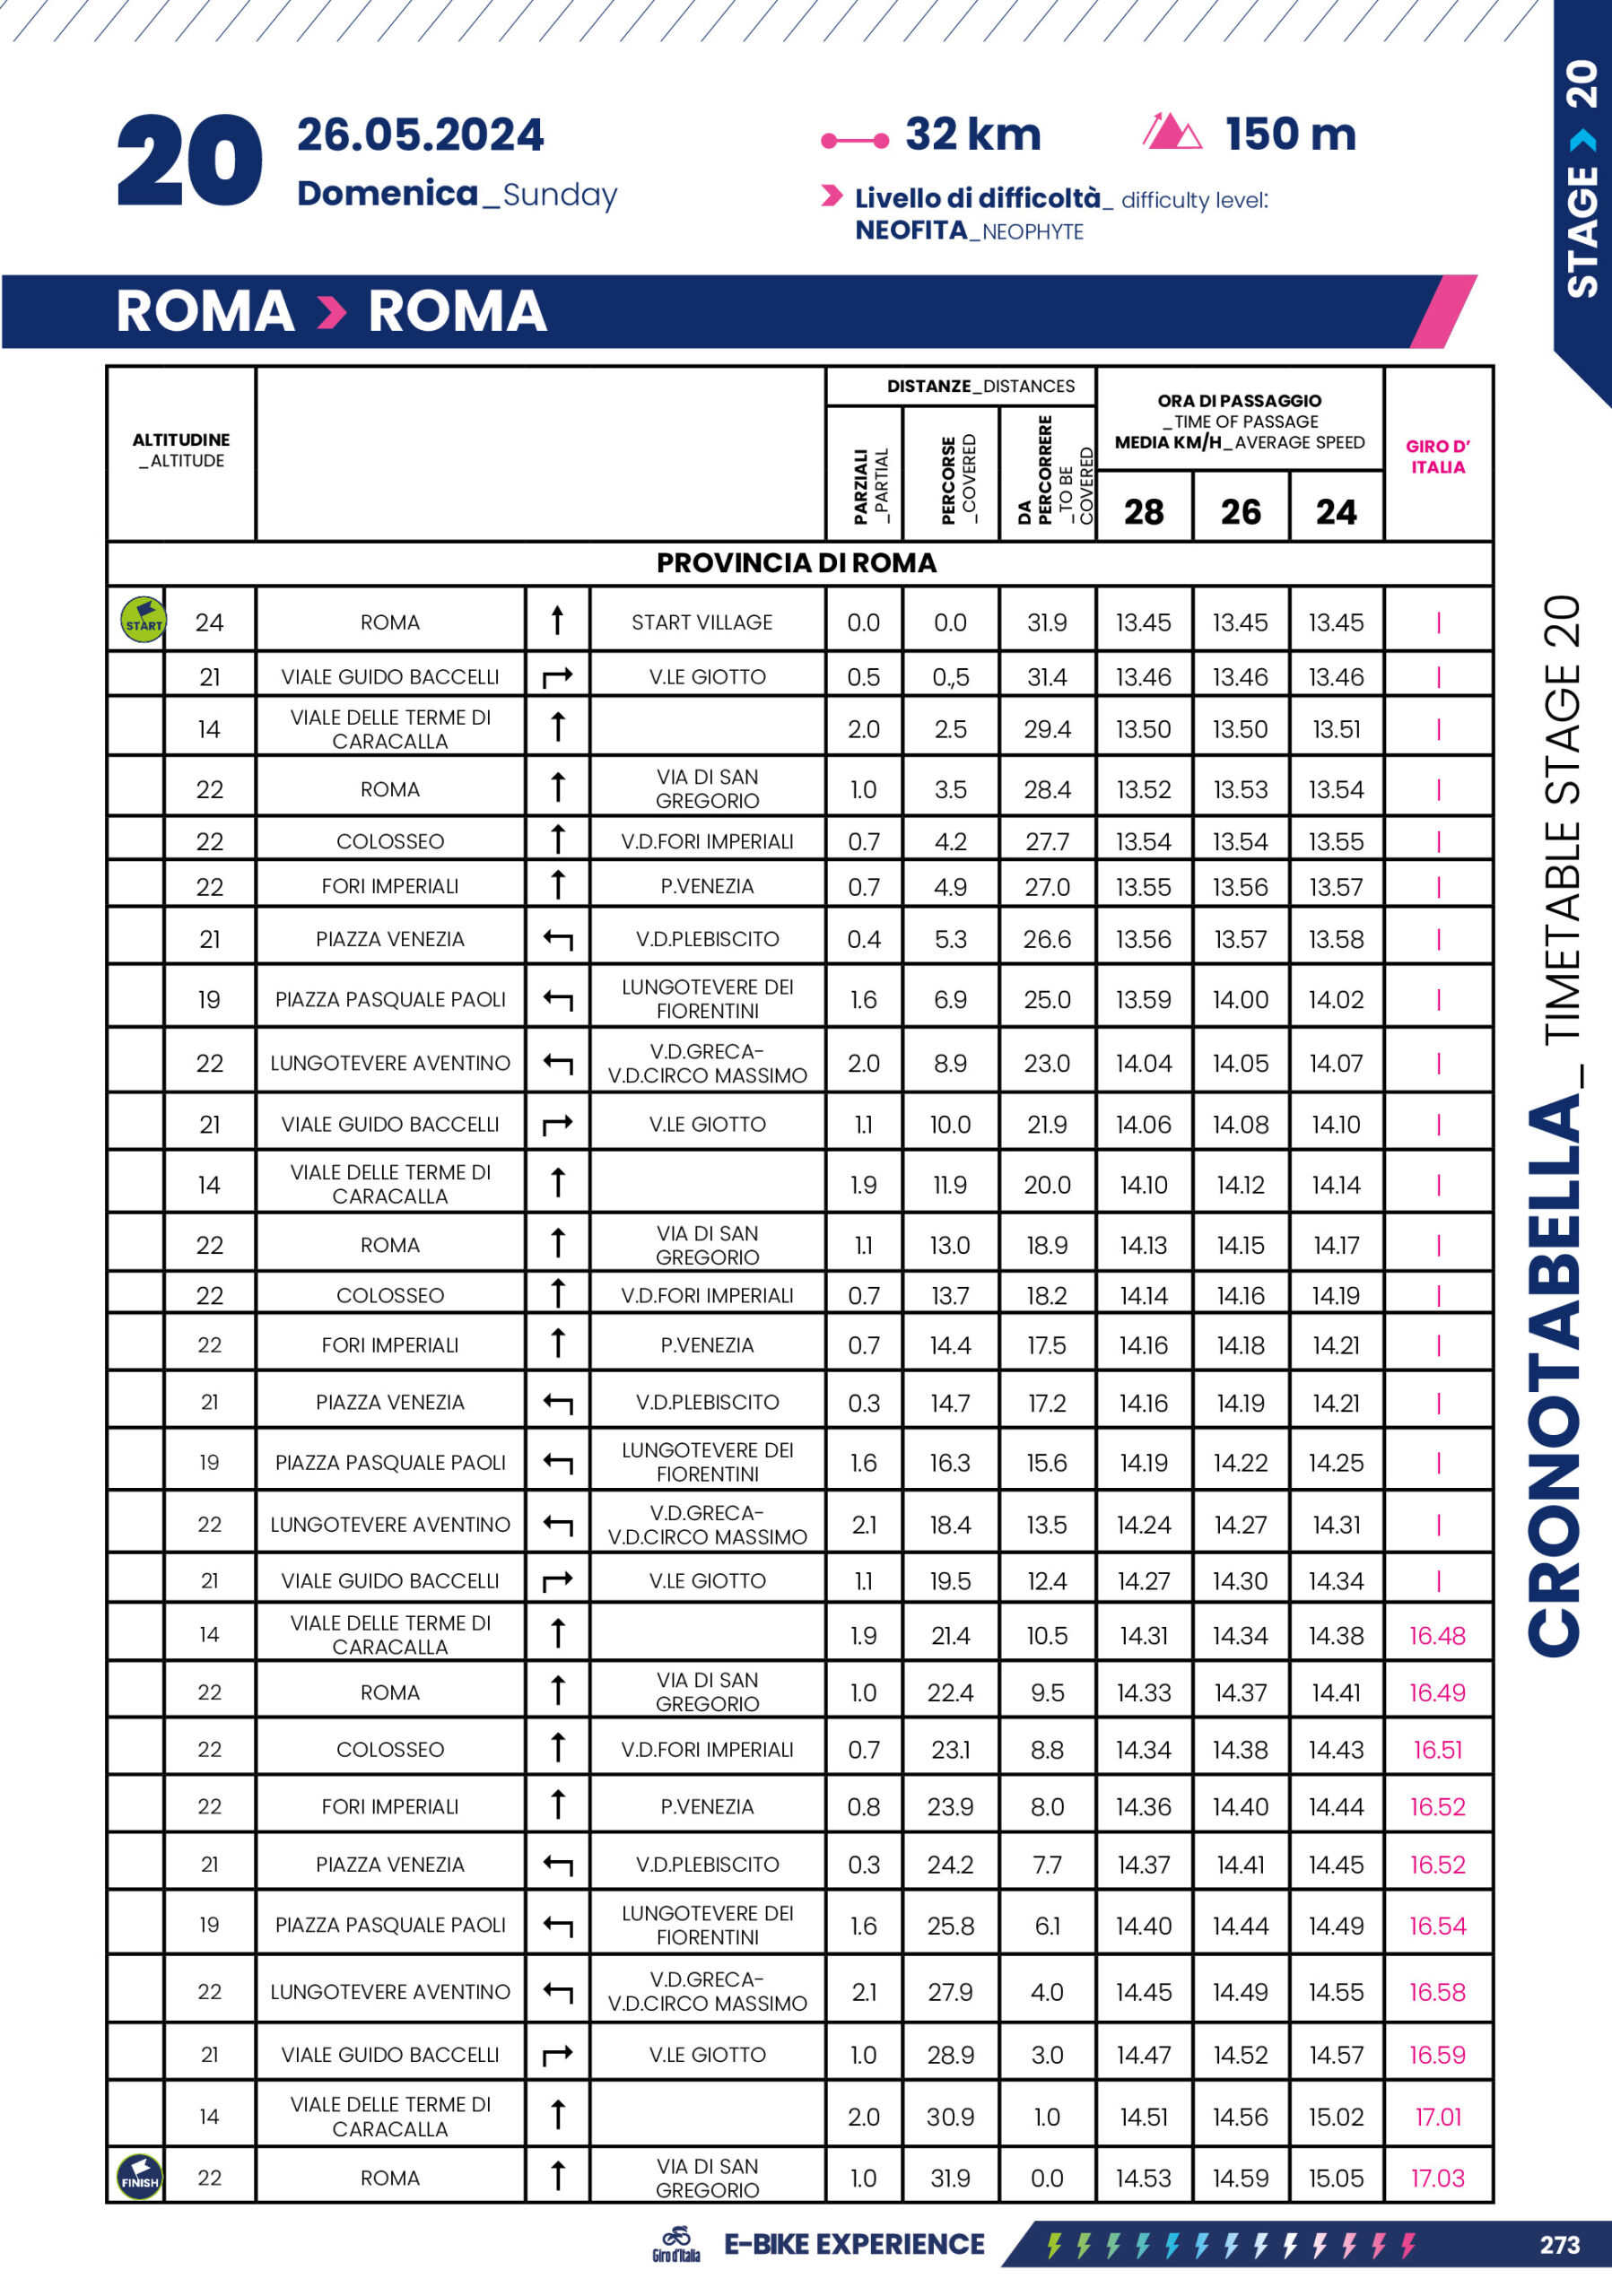 Cronotabella/Itinerary Timetable Tappa 20 Giro-E 2024